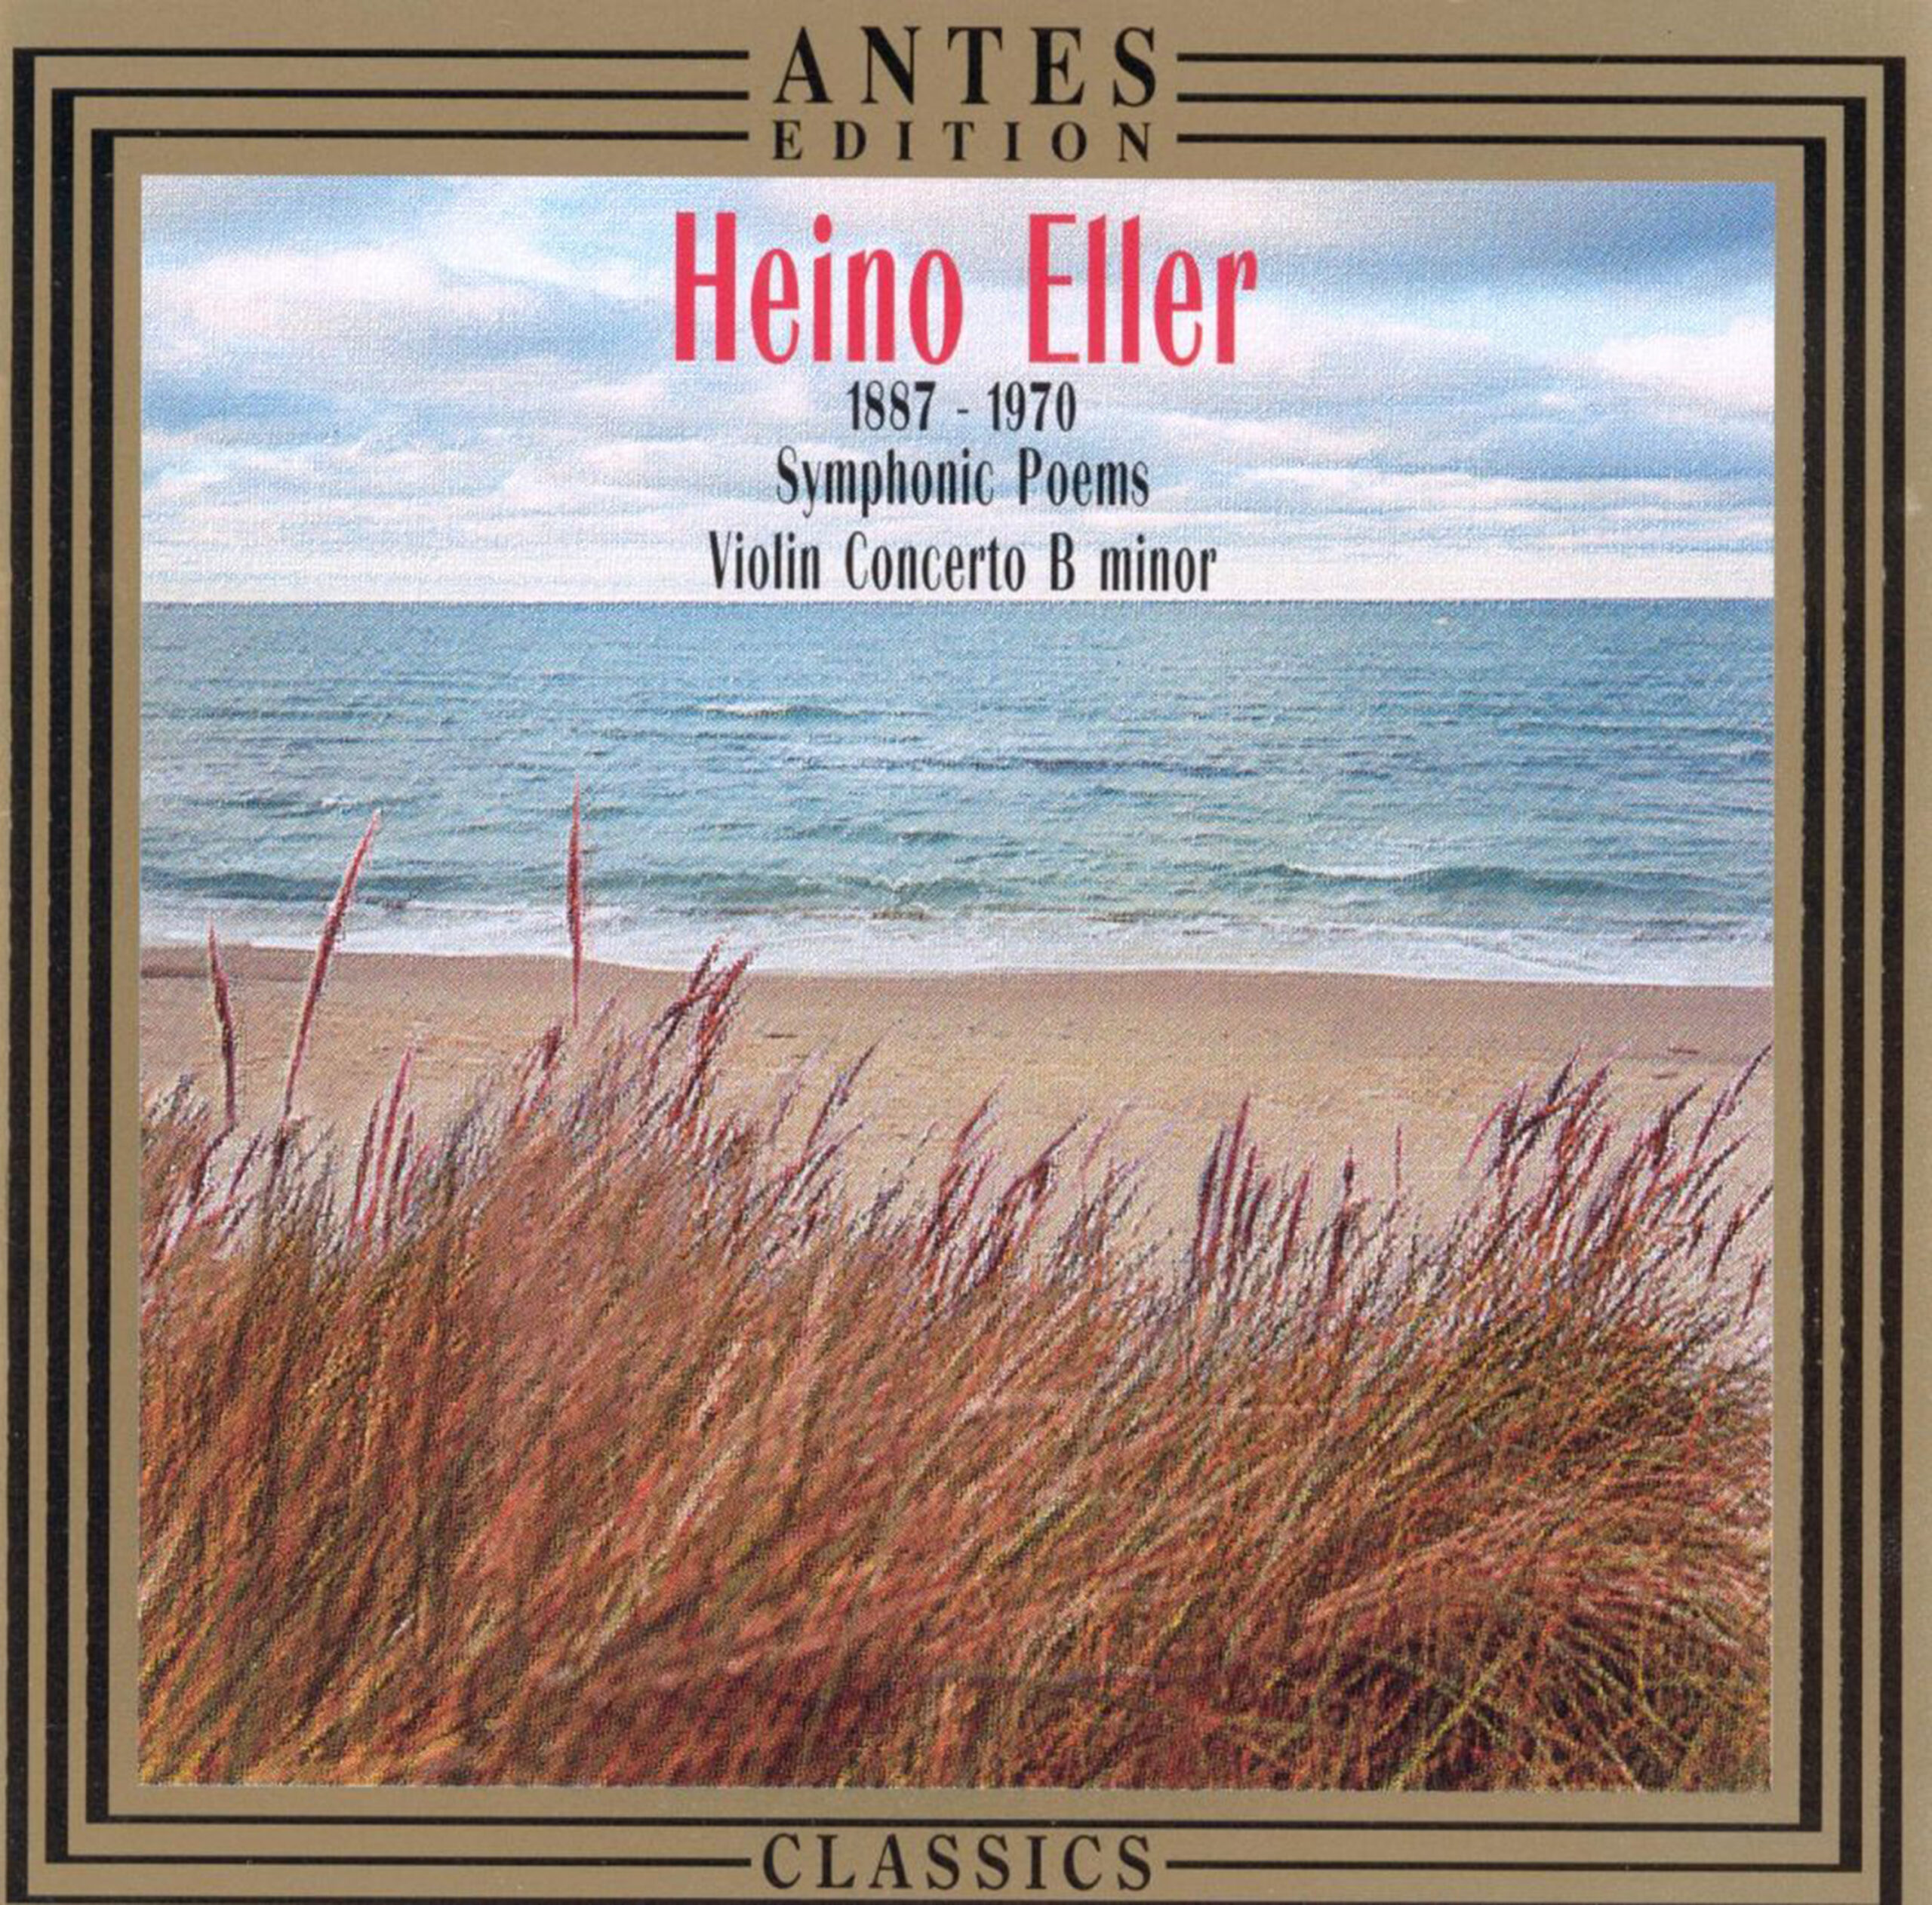 HEINO ELLER. Symphonic Poems, Violin Concerto B minor. Viktor Pikaizen, Peeter Lilje, Vello Pähn. Antes Edition 1999